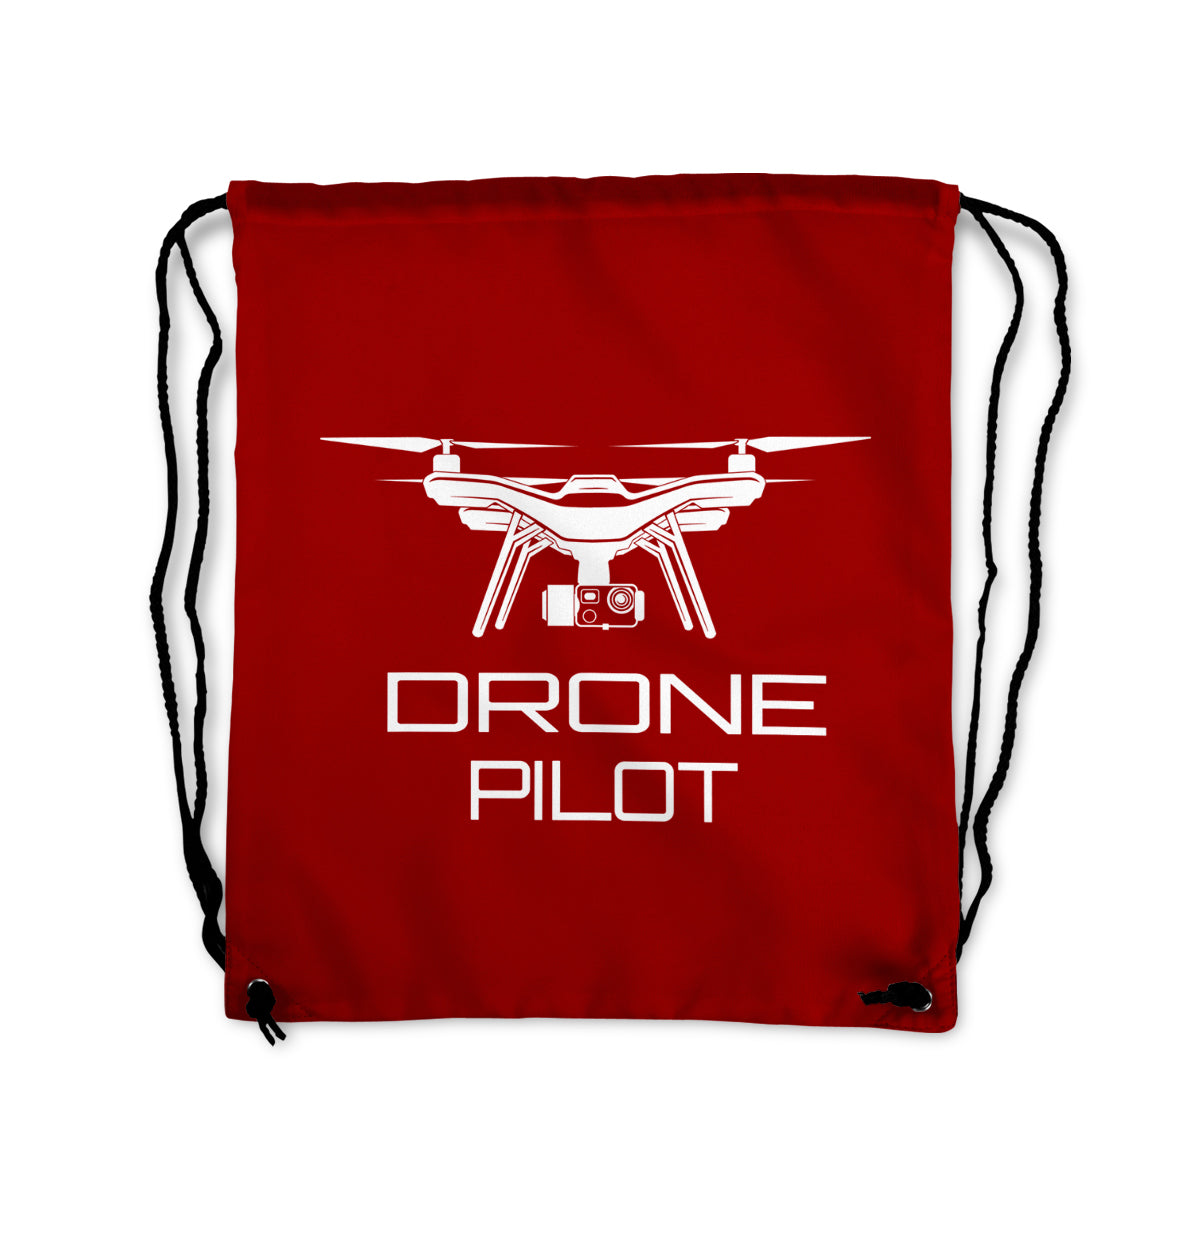 Drone Pilot Designed Drawstring Bags